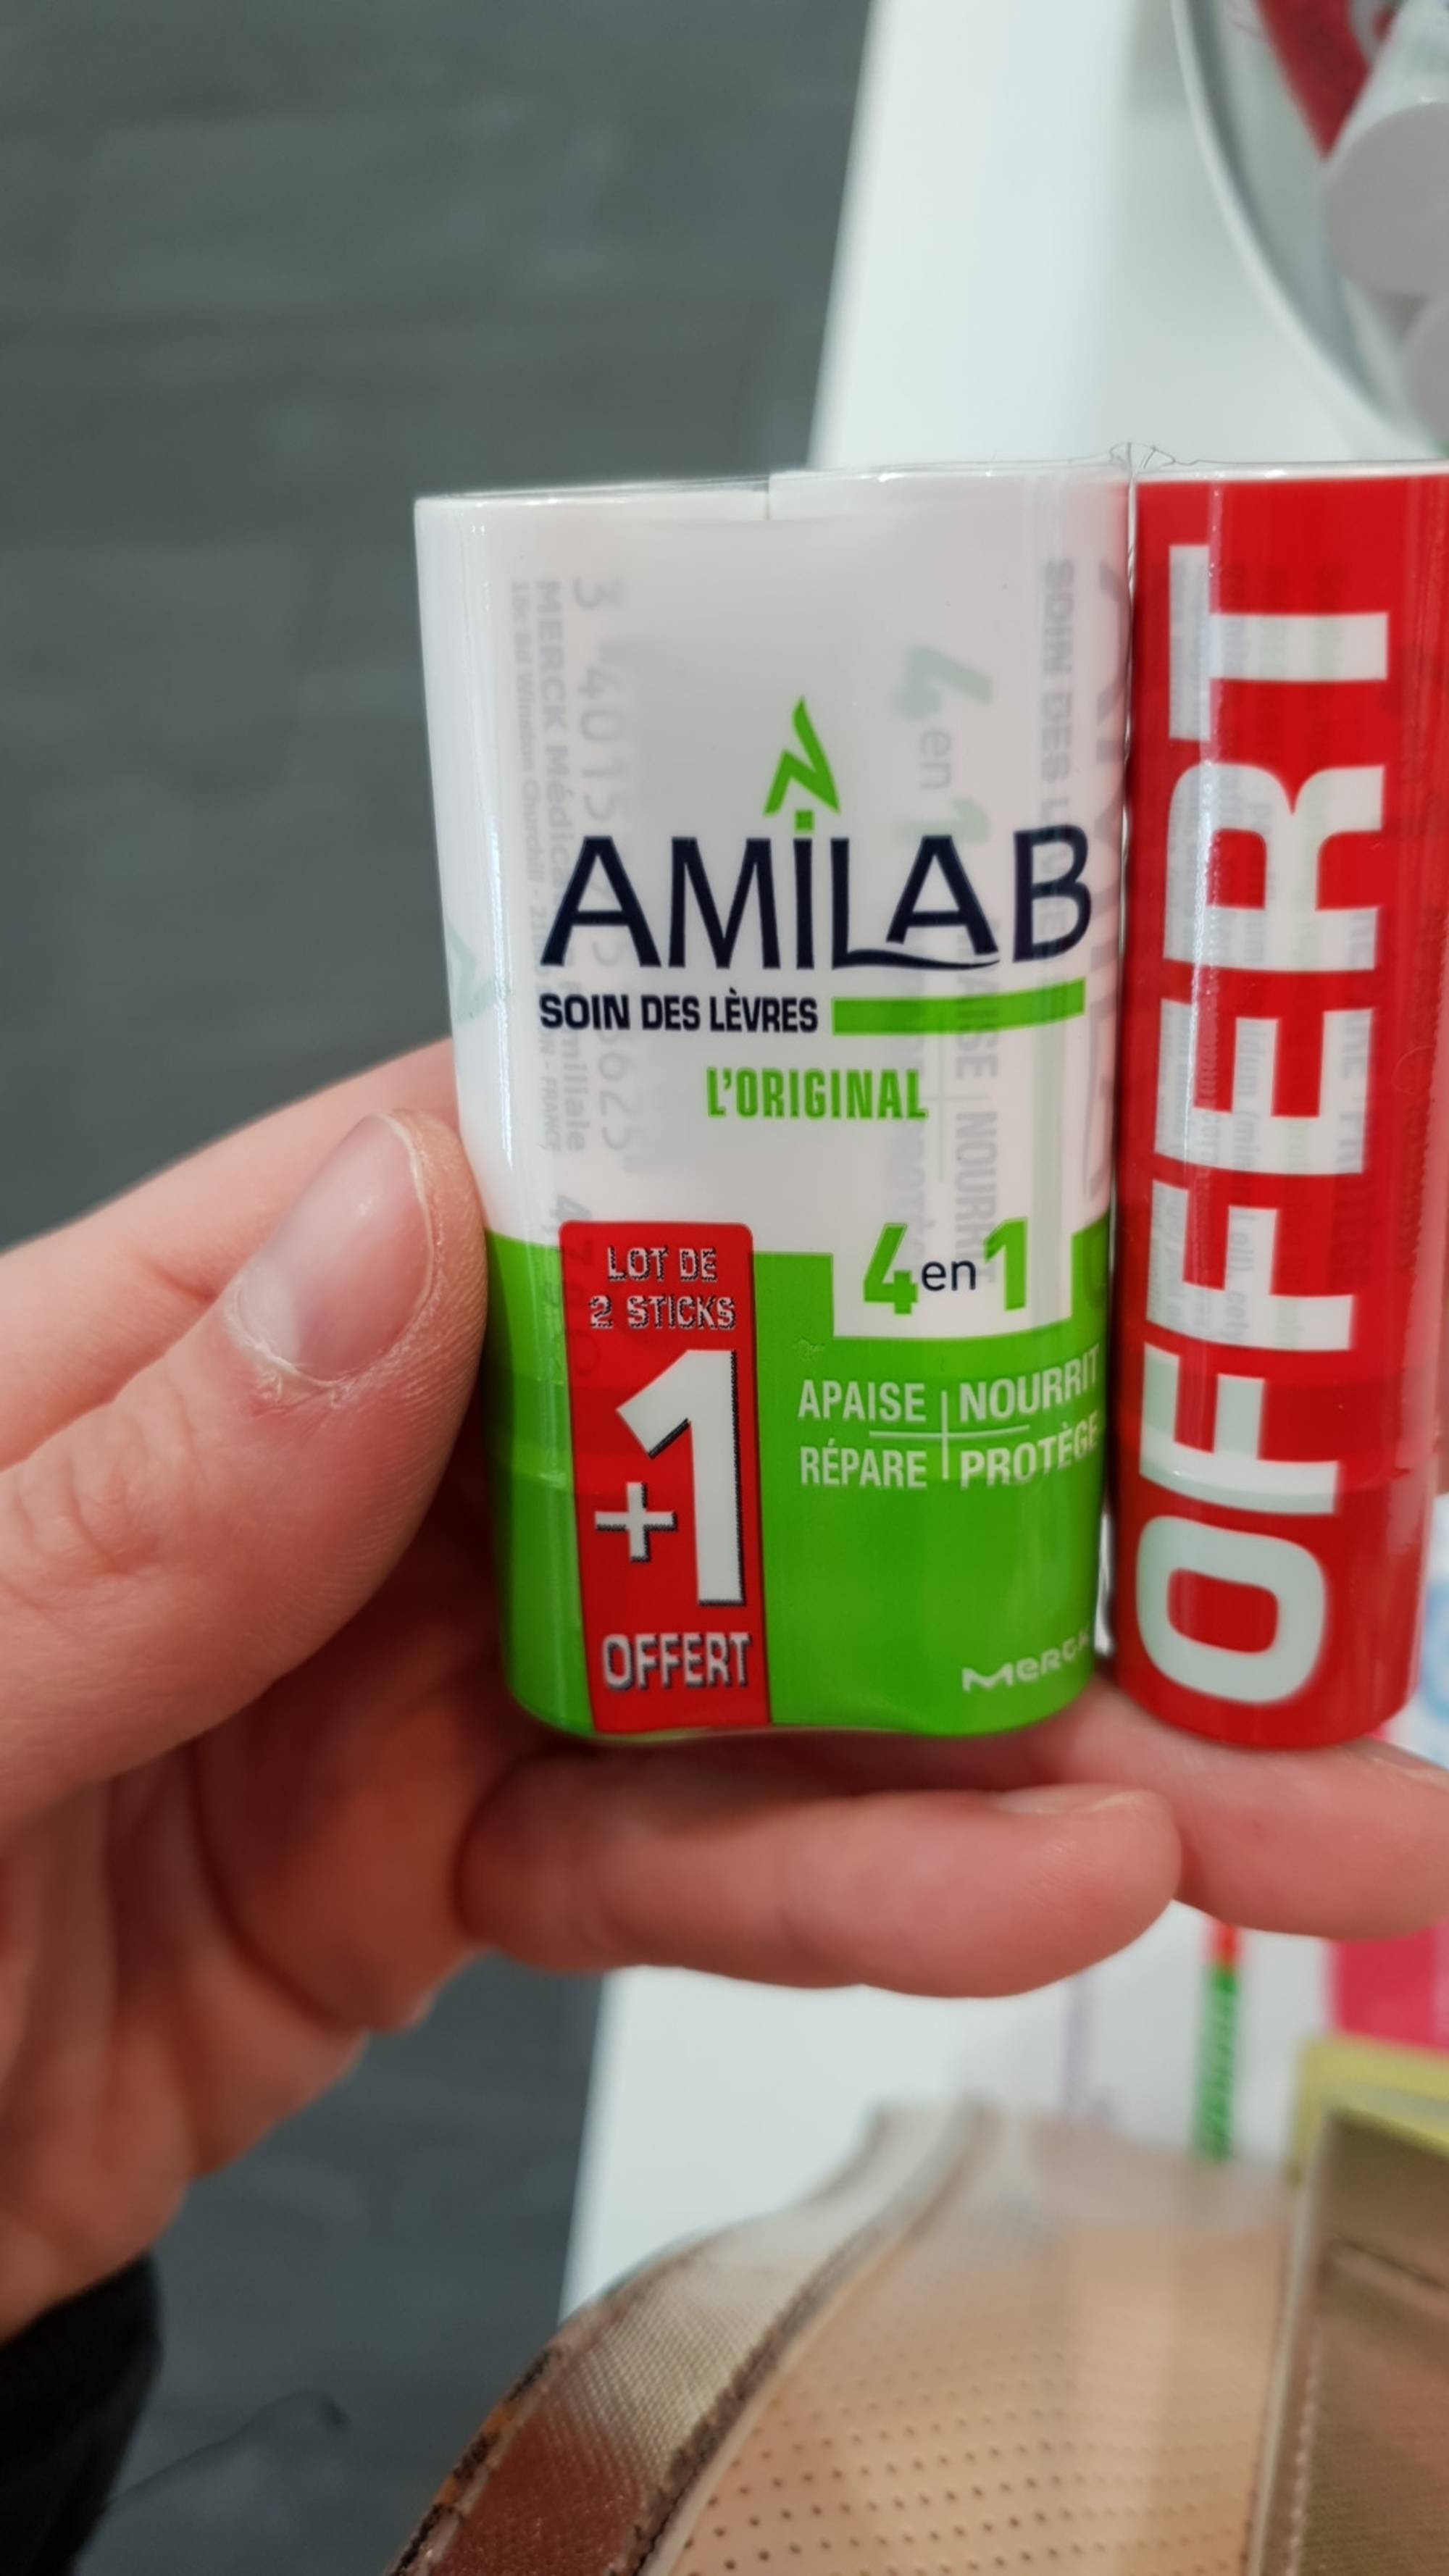 AMILAB - L'original - Soin des lèvres 4 en 1